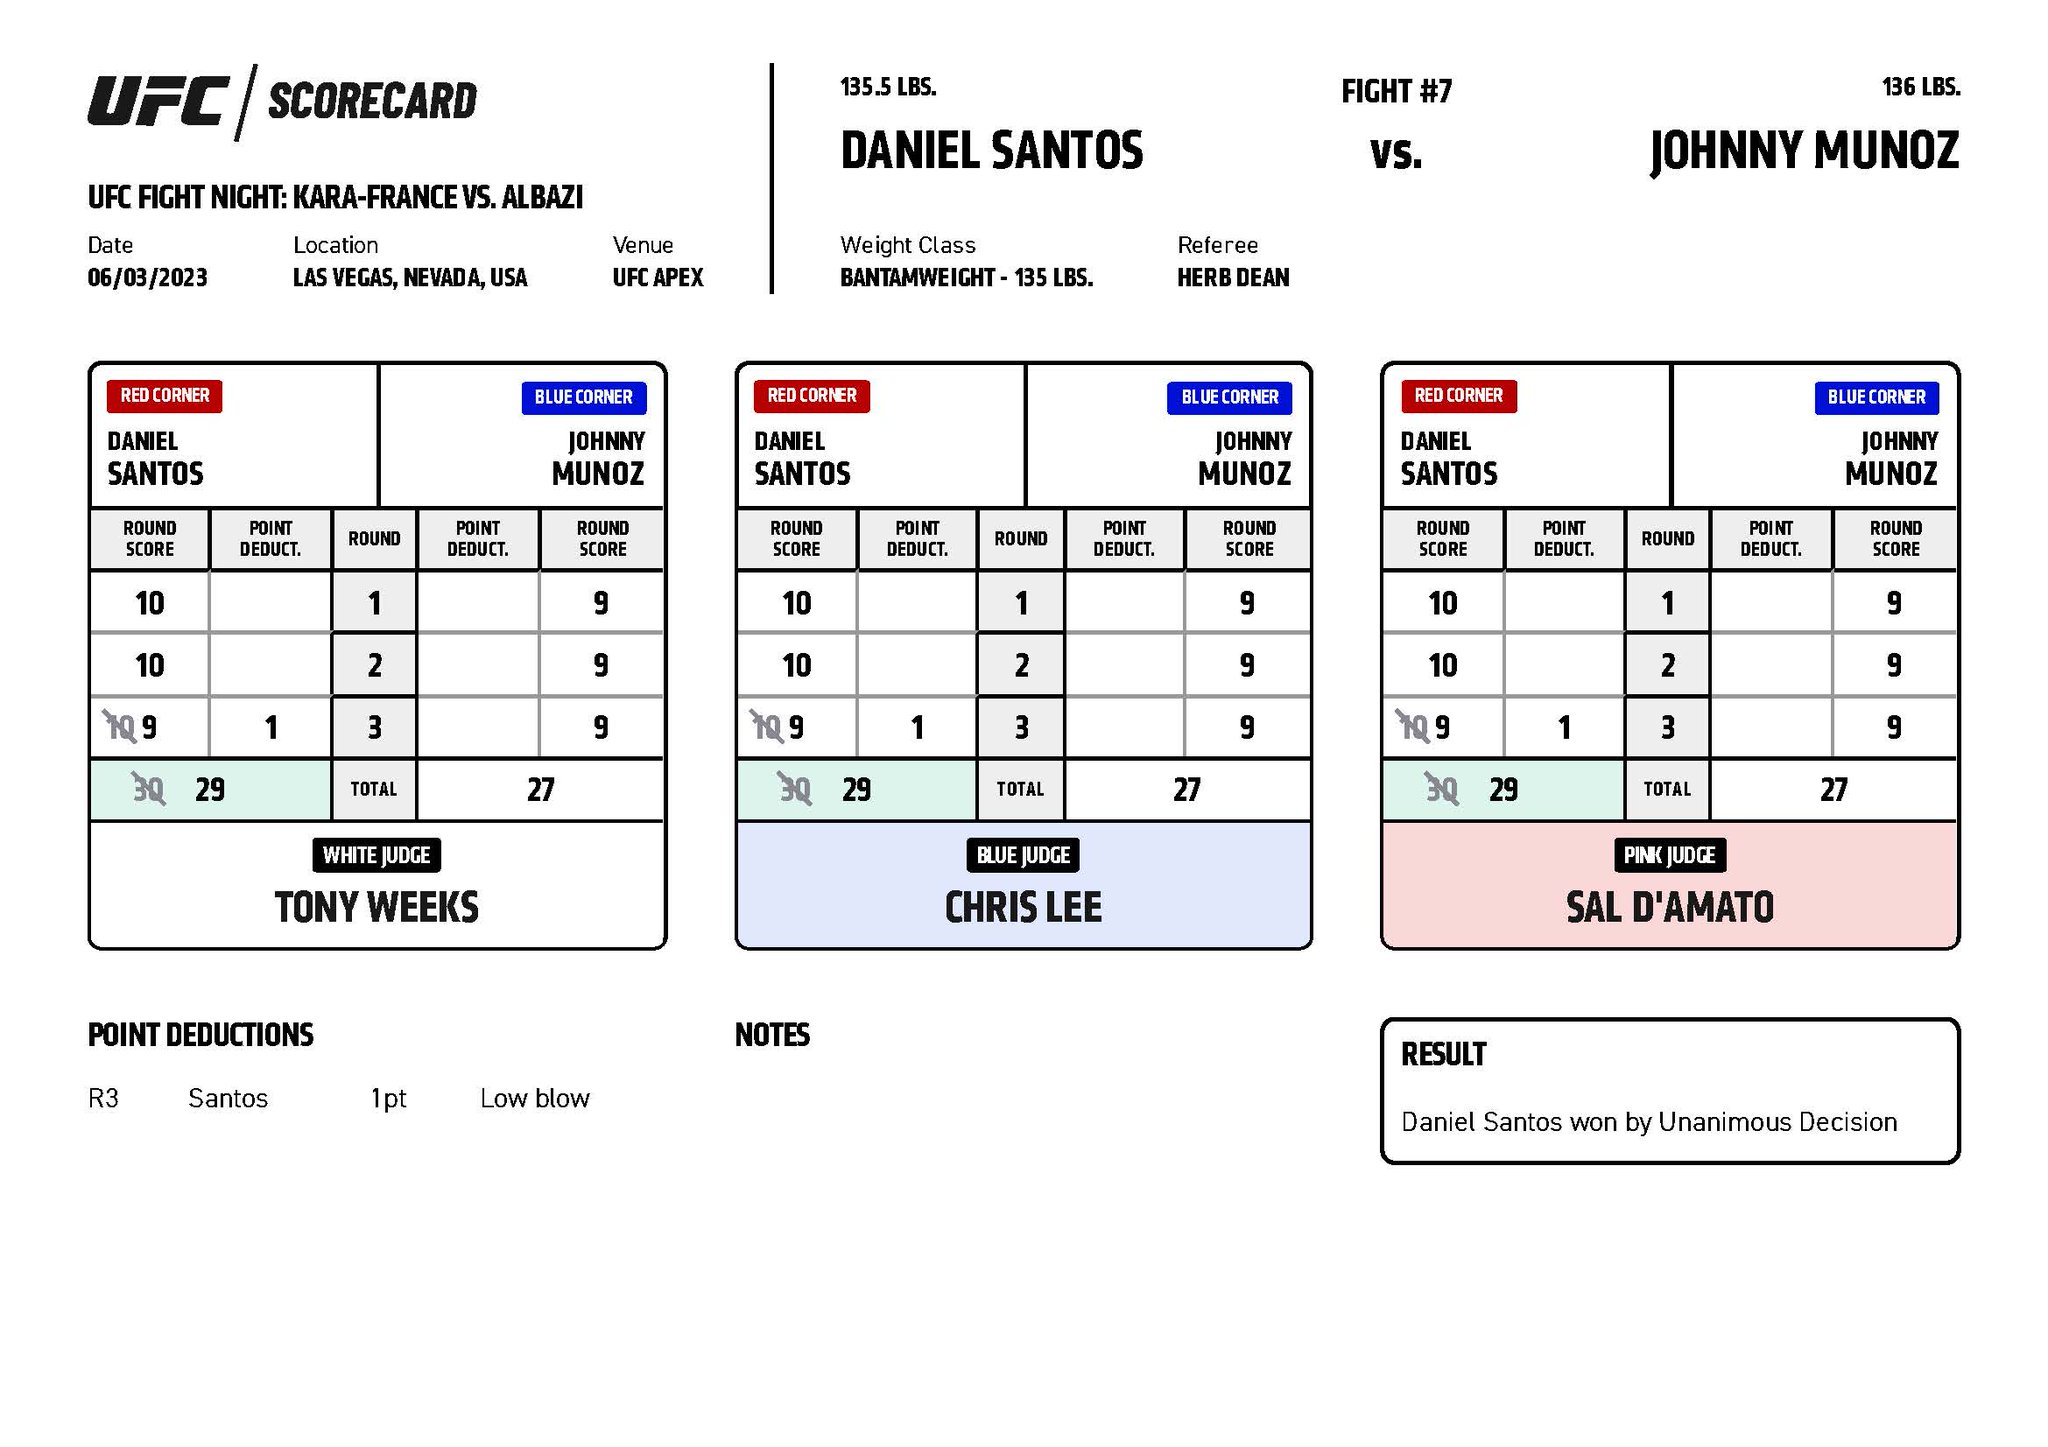 UFC Vegas 74 - Daniel Santos vs Johnny Munoz Jr